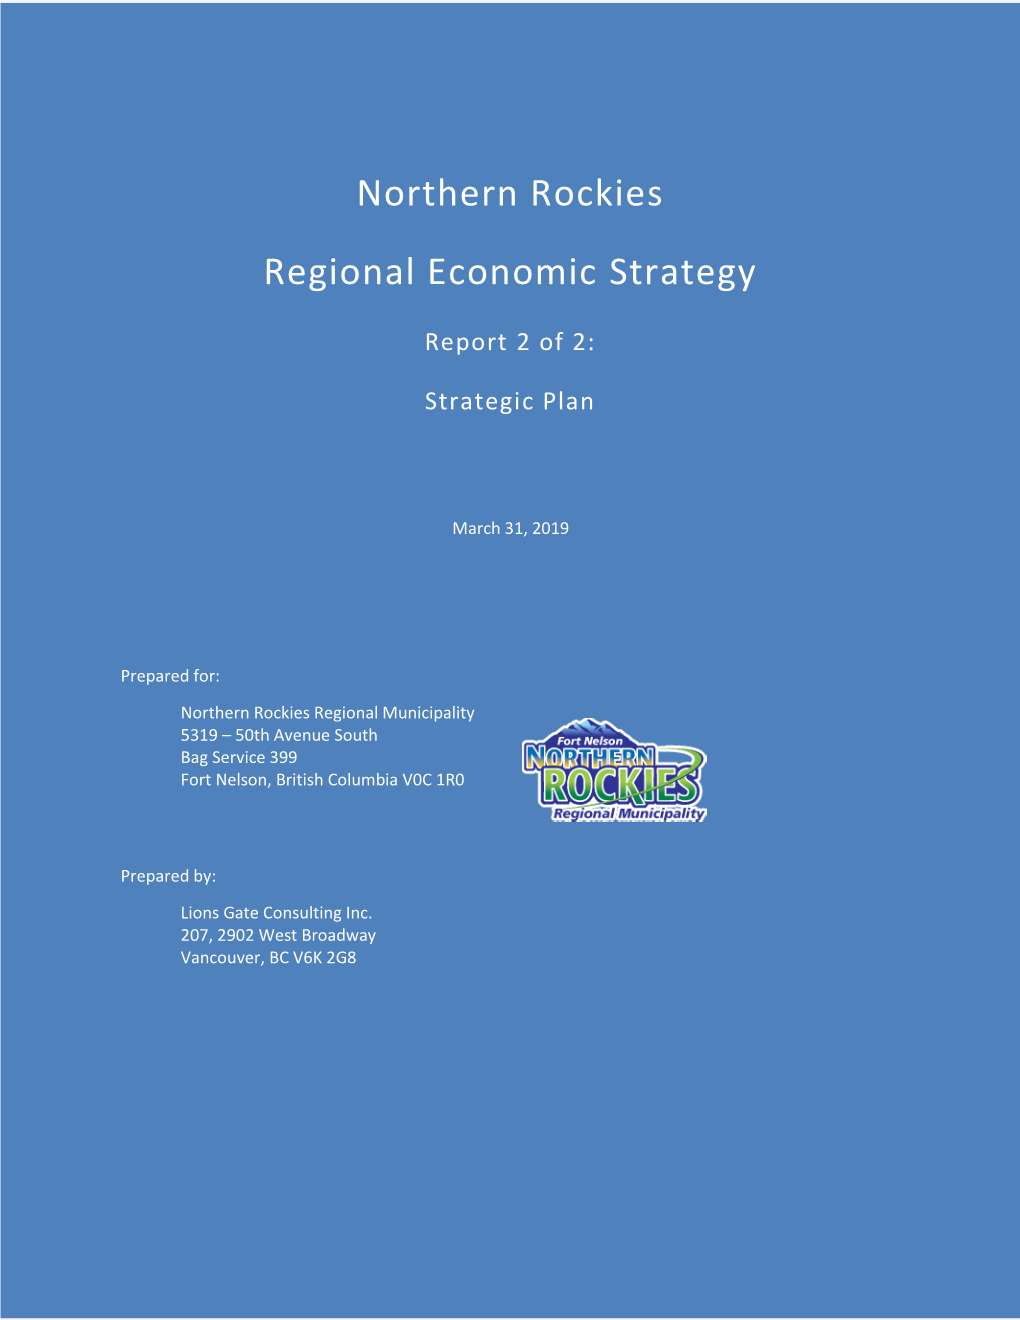 Northern Rockies Regional Economic Strategy